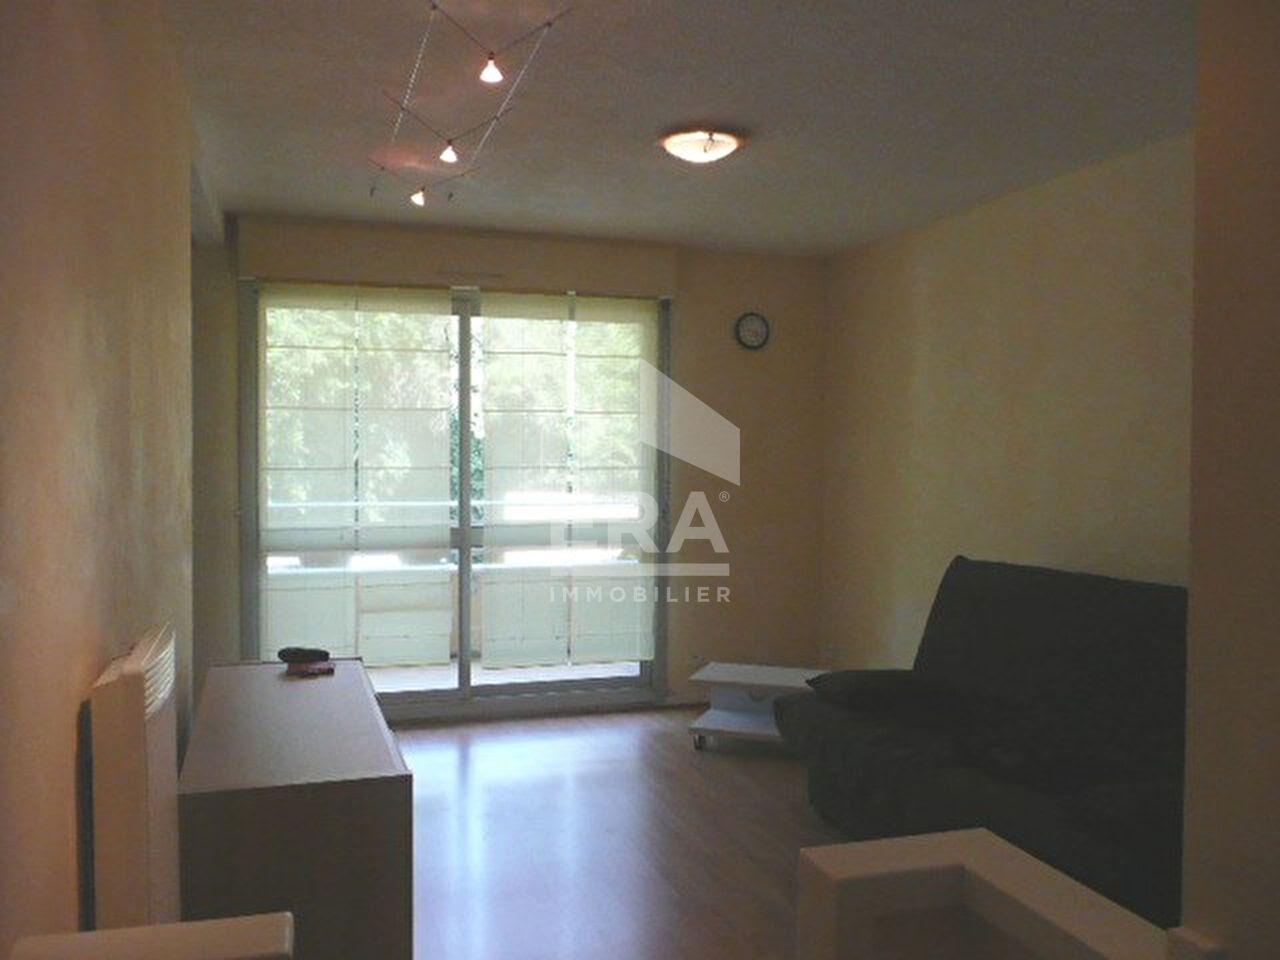 Location studio meublé 30 m2